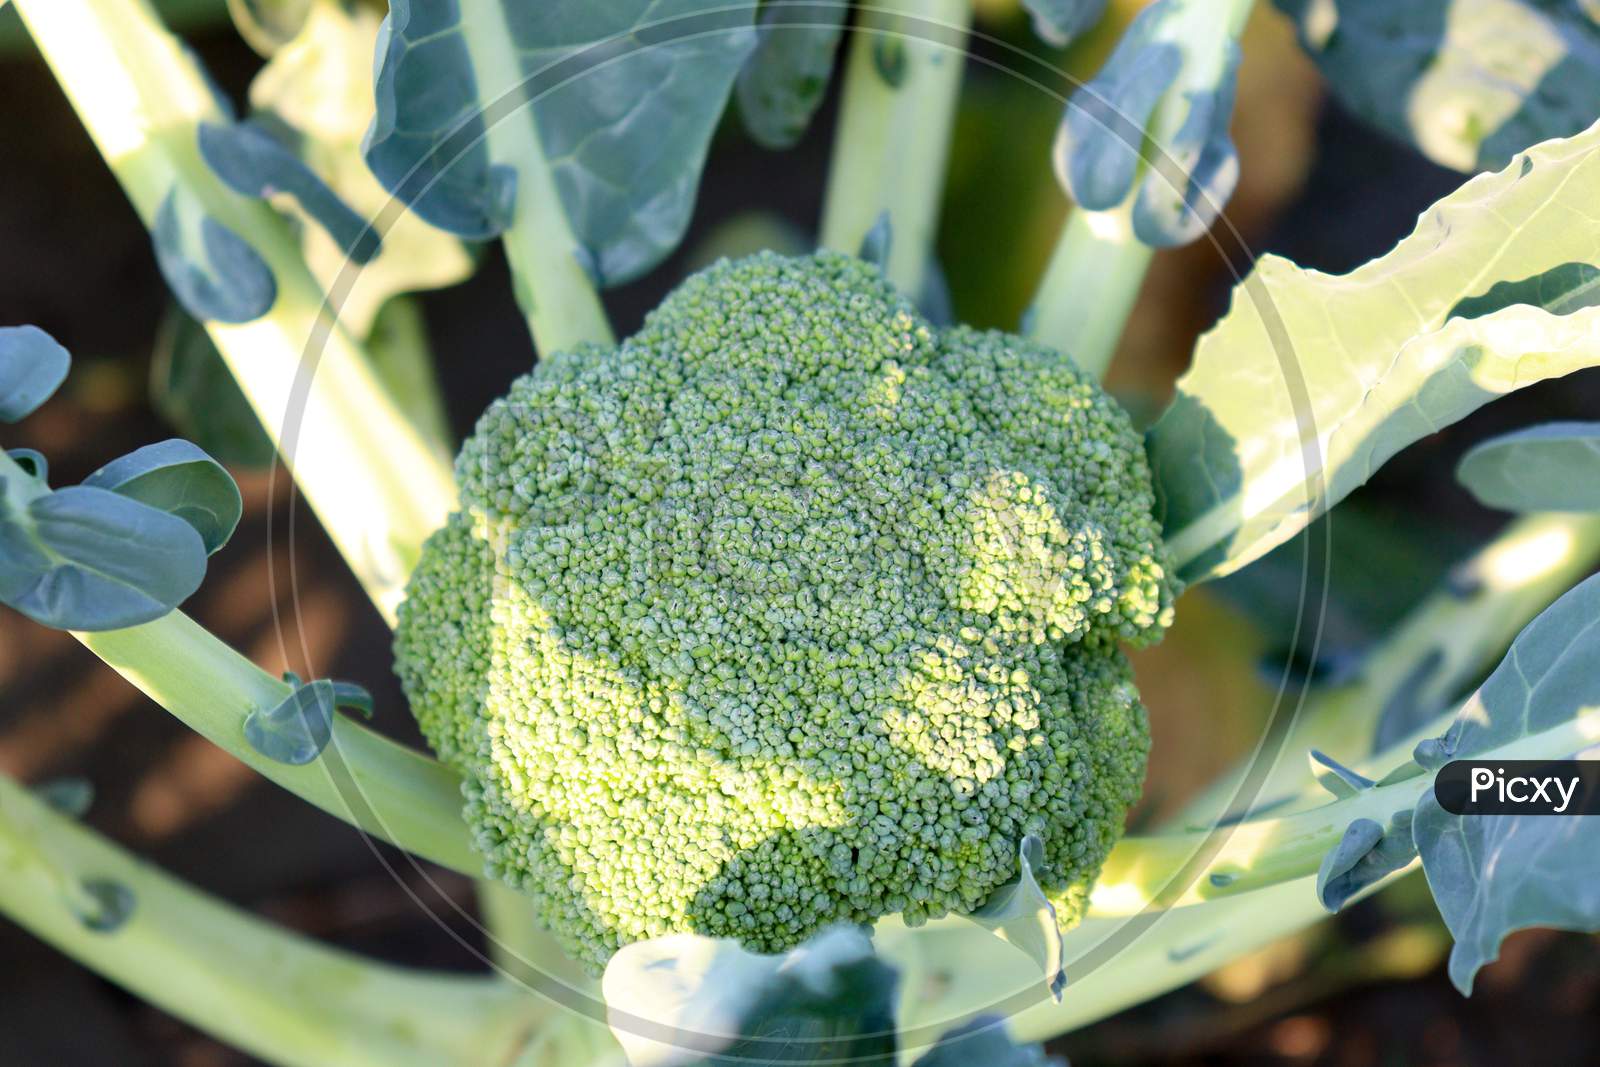 Green Colored Broccoli On Tree In Farm